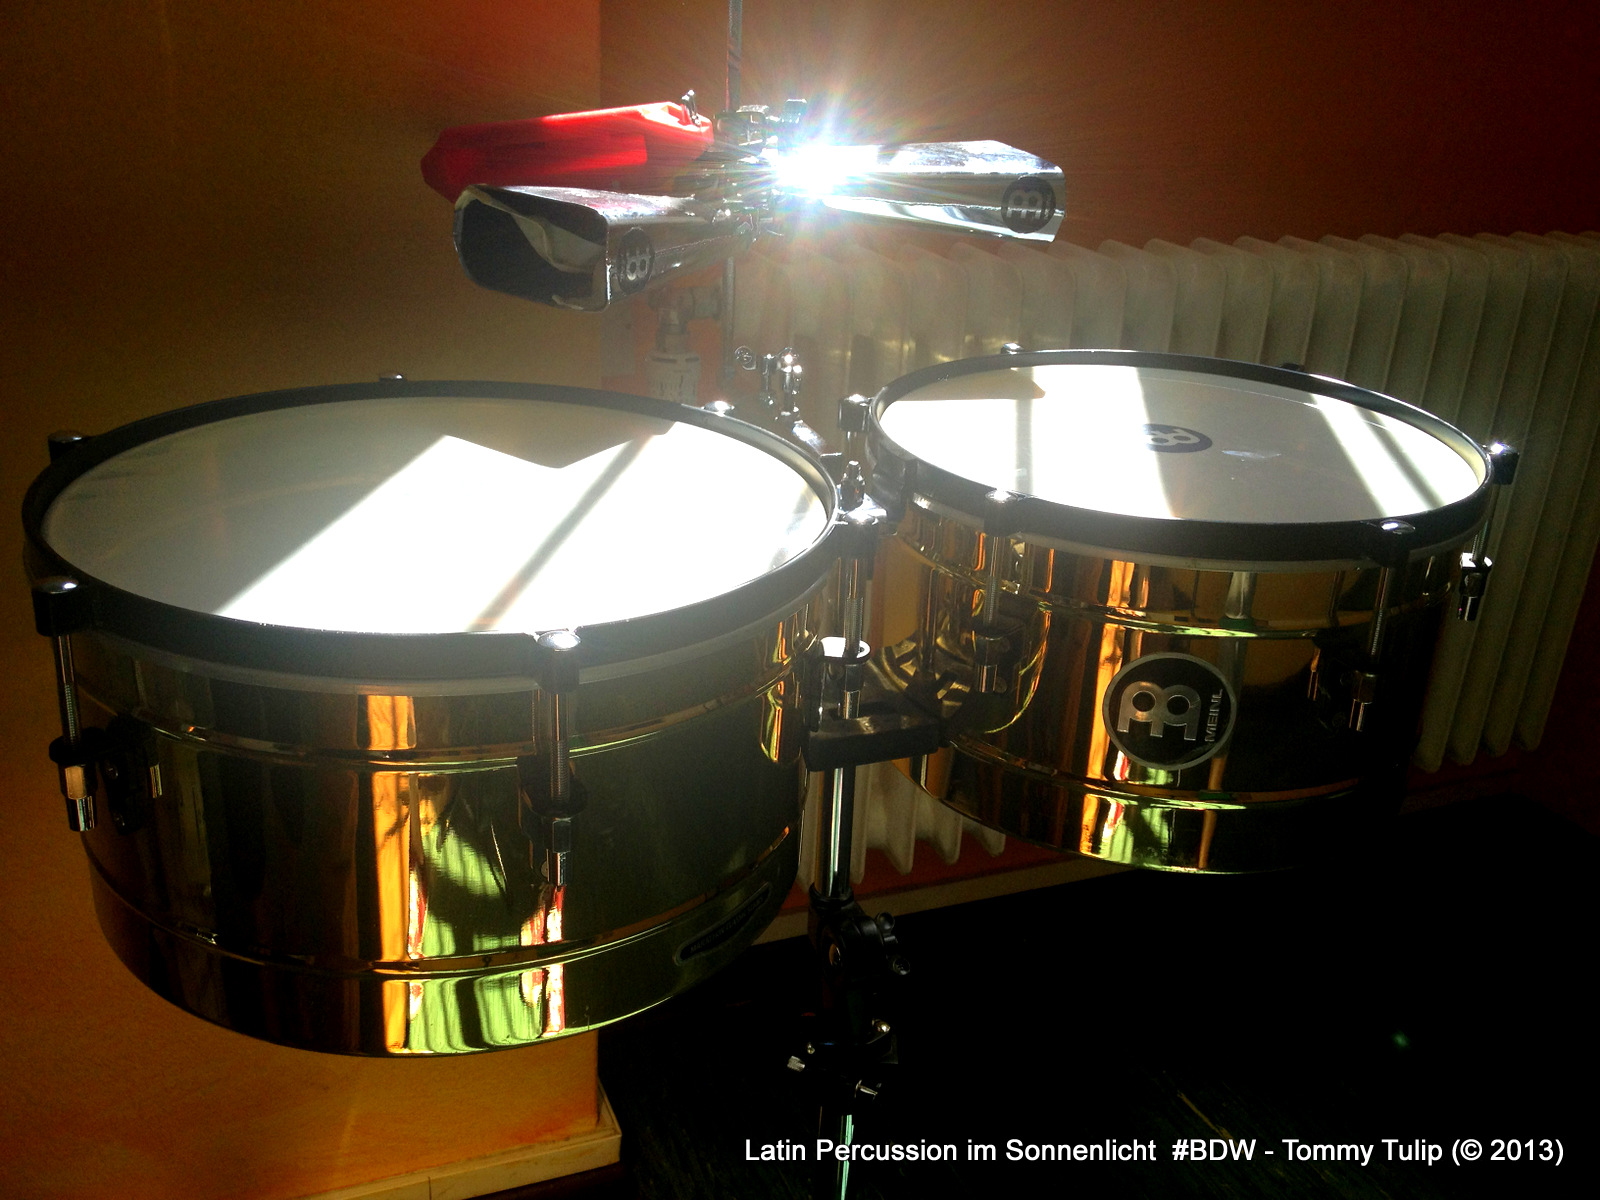 Latin Percussion im Sonnenlicht #BDW